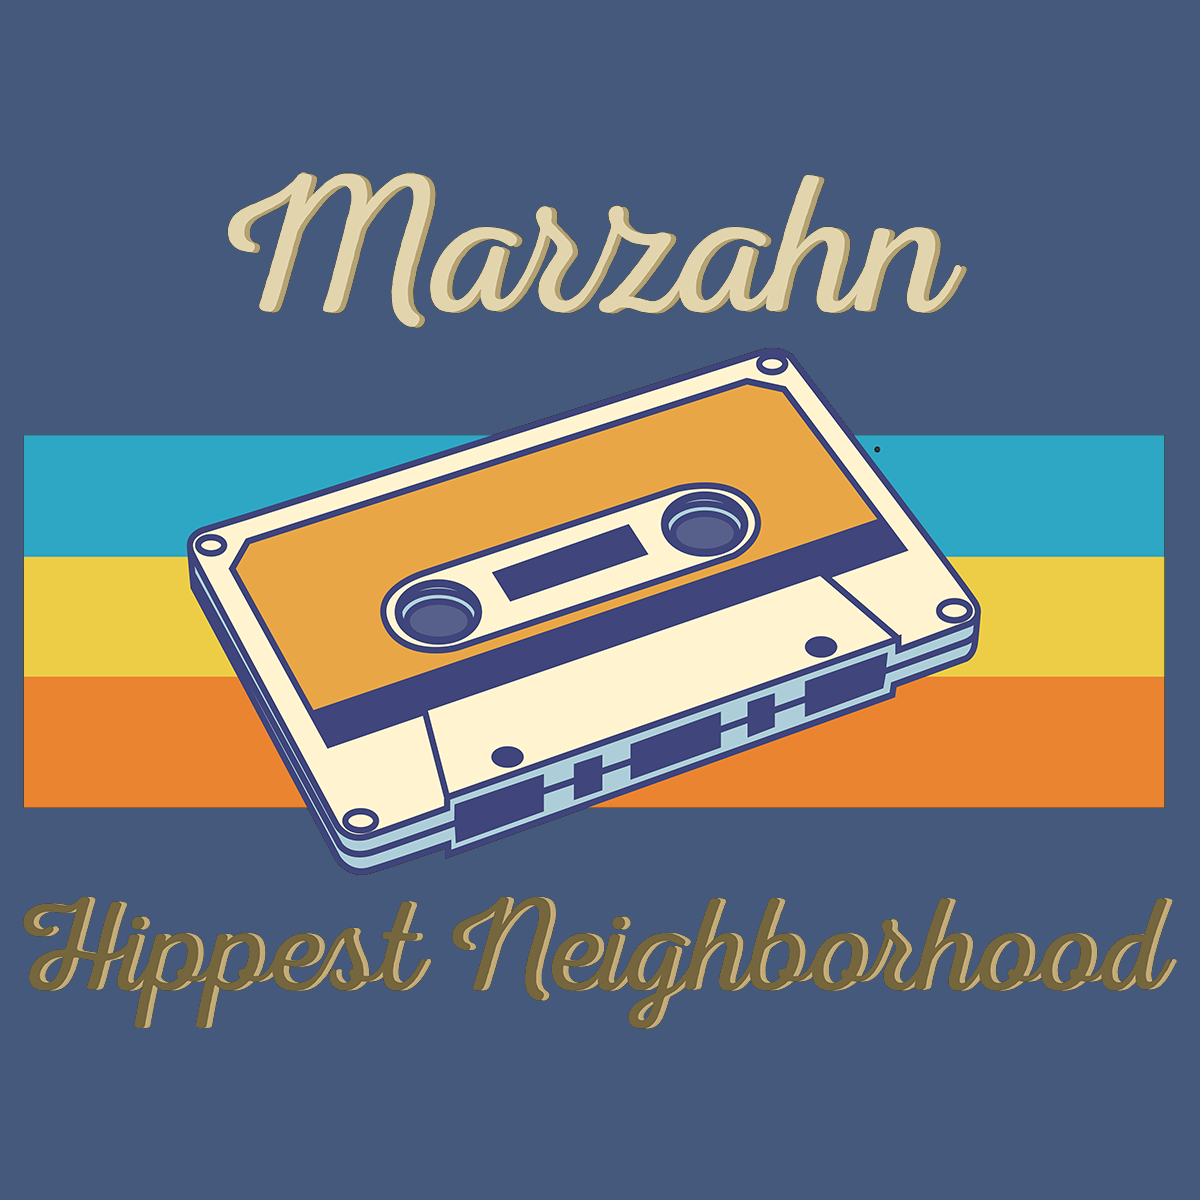 Marzahn Hippest Neighborhood